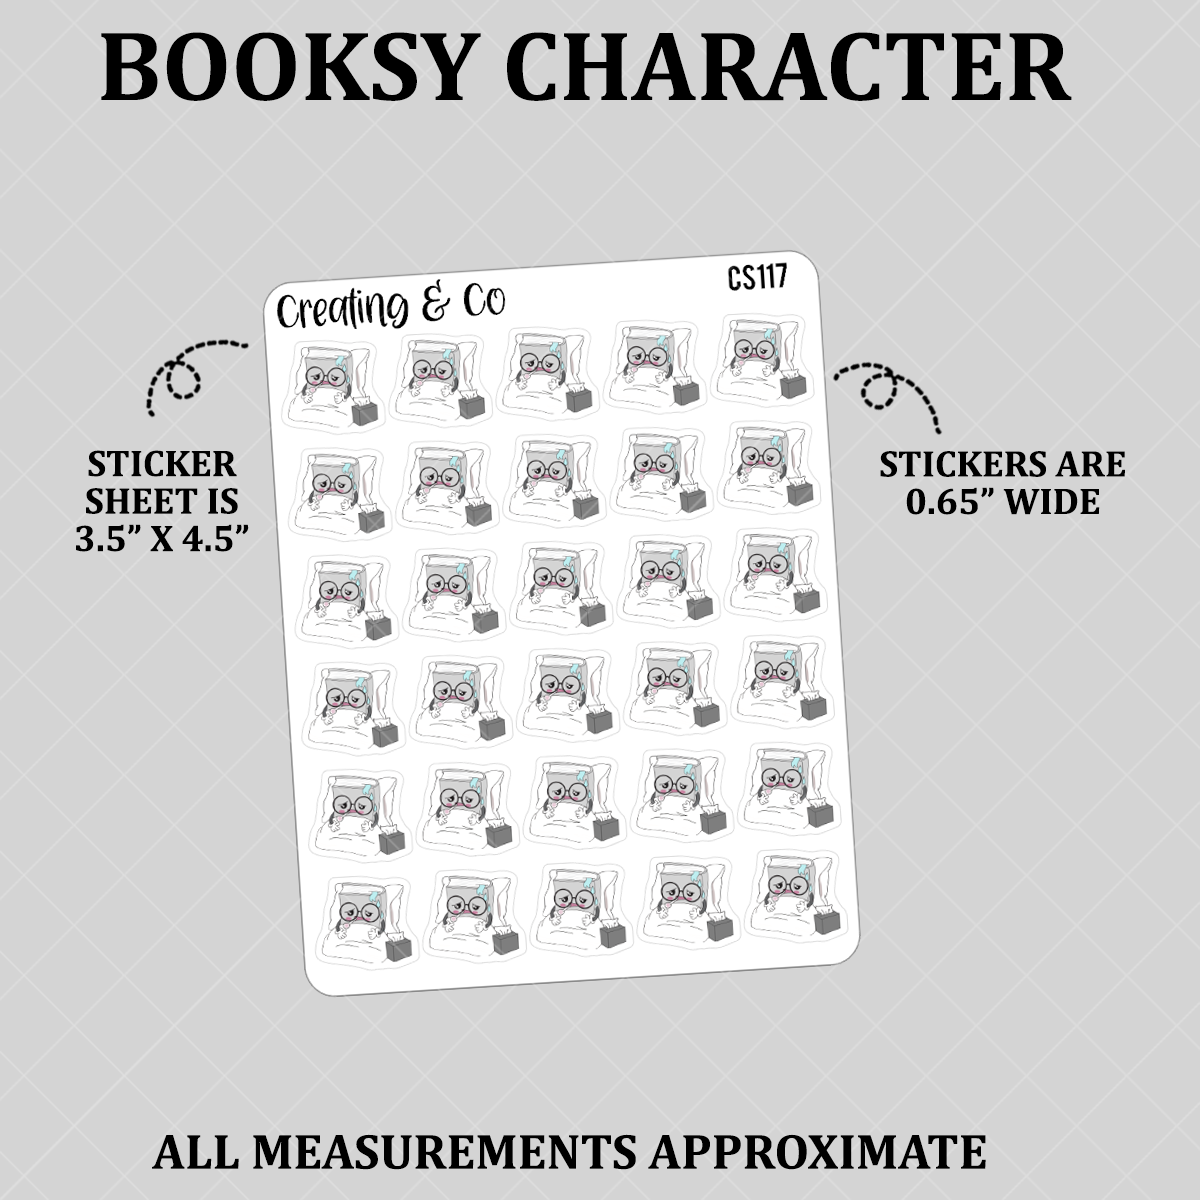 Sick Booksy Character Functional Stickers - CS117